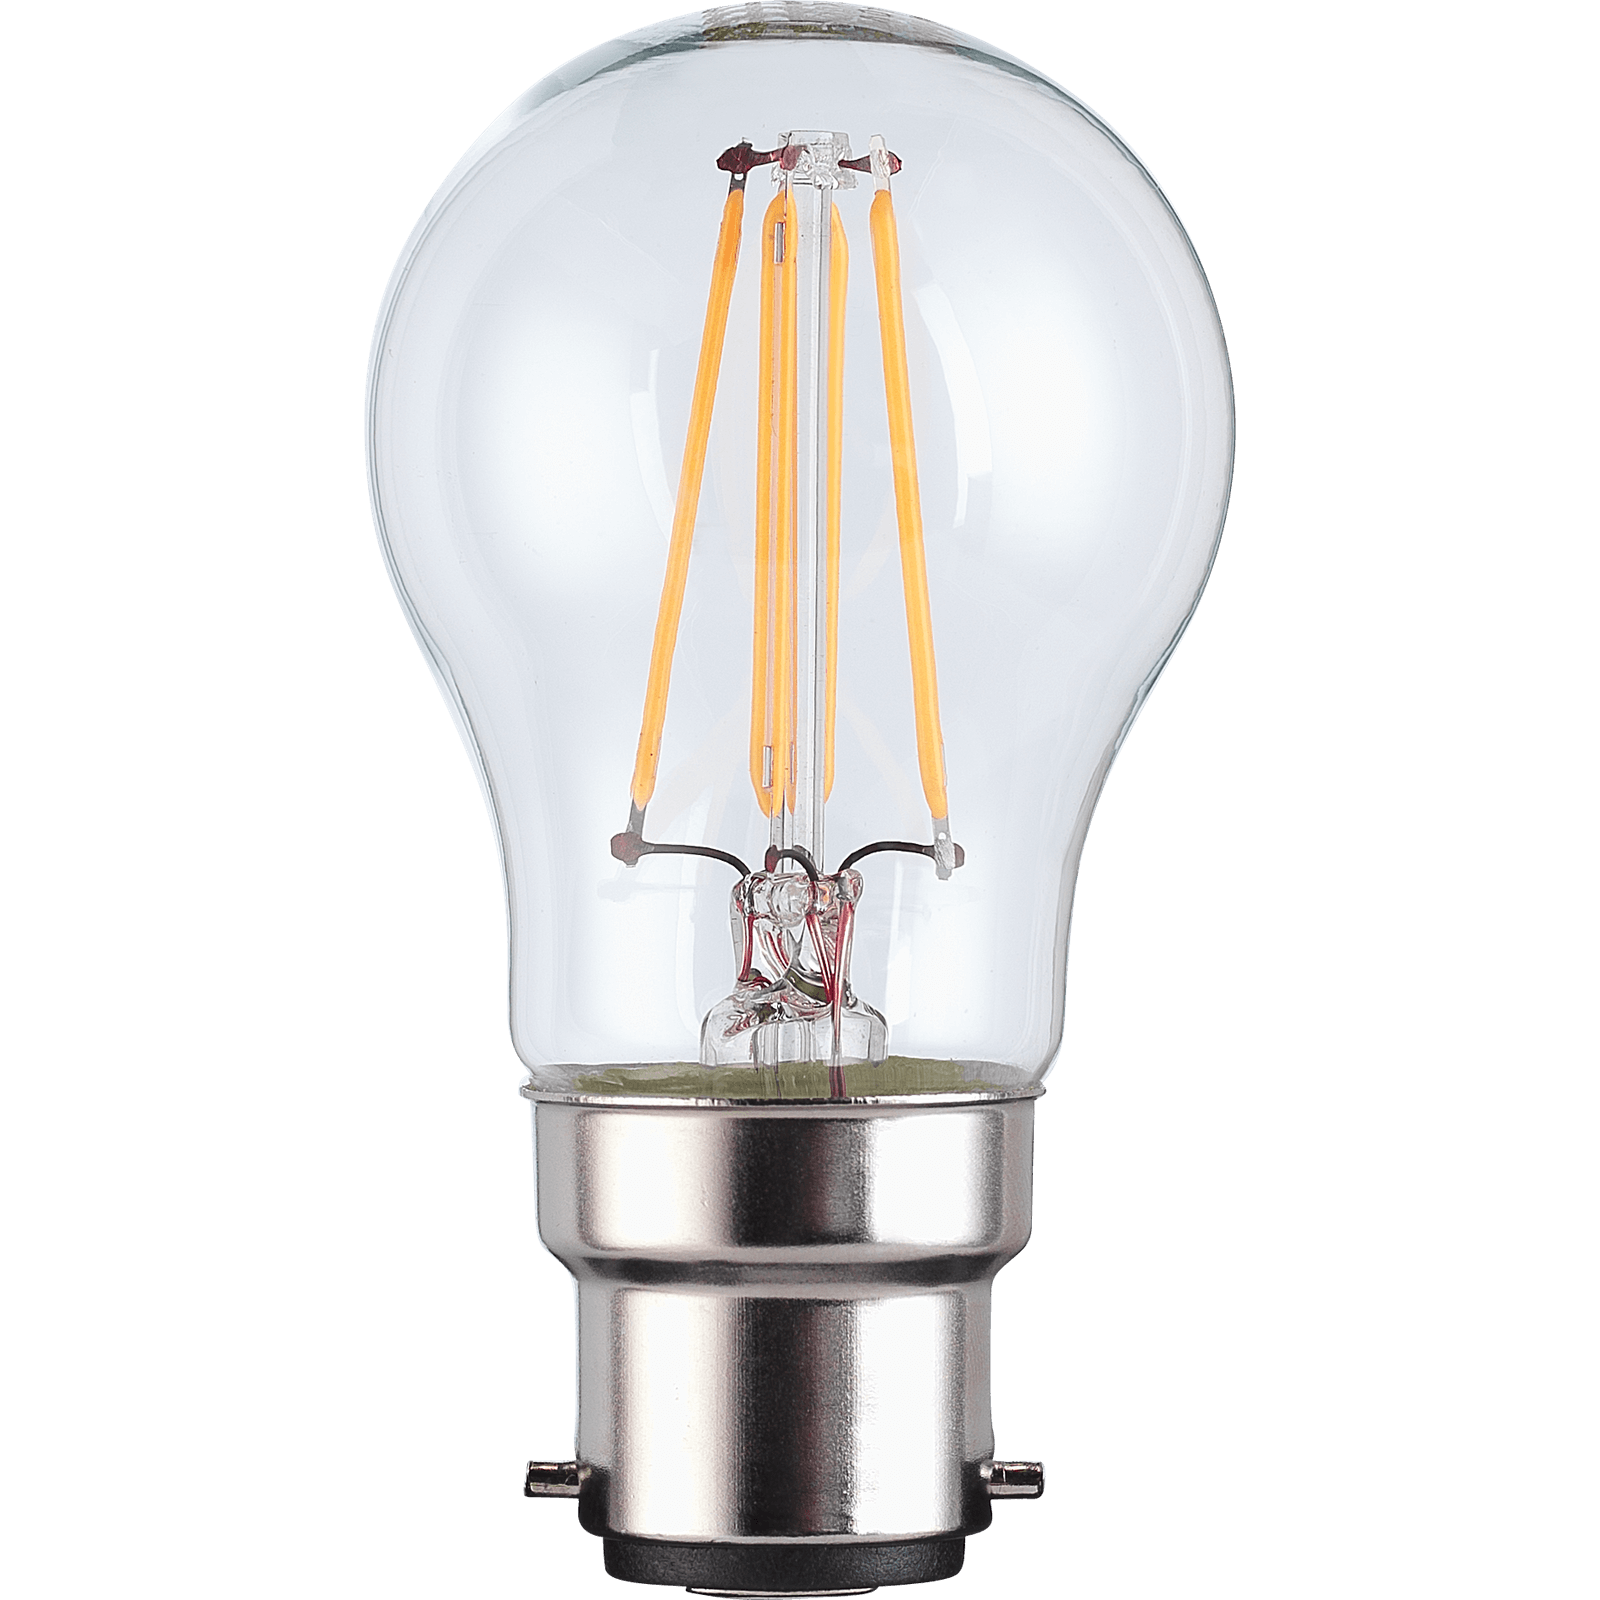 TCP Filament Globe Clear 40W BC Warm Dimmable Light Bulb